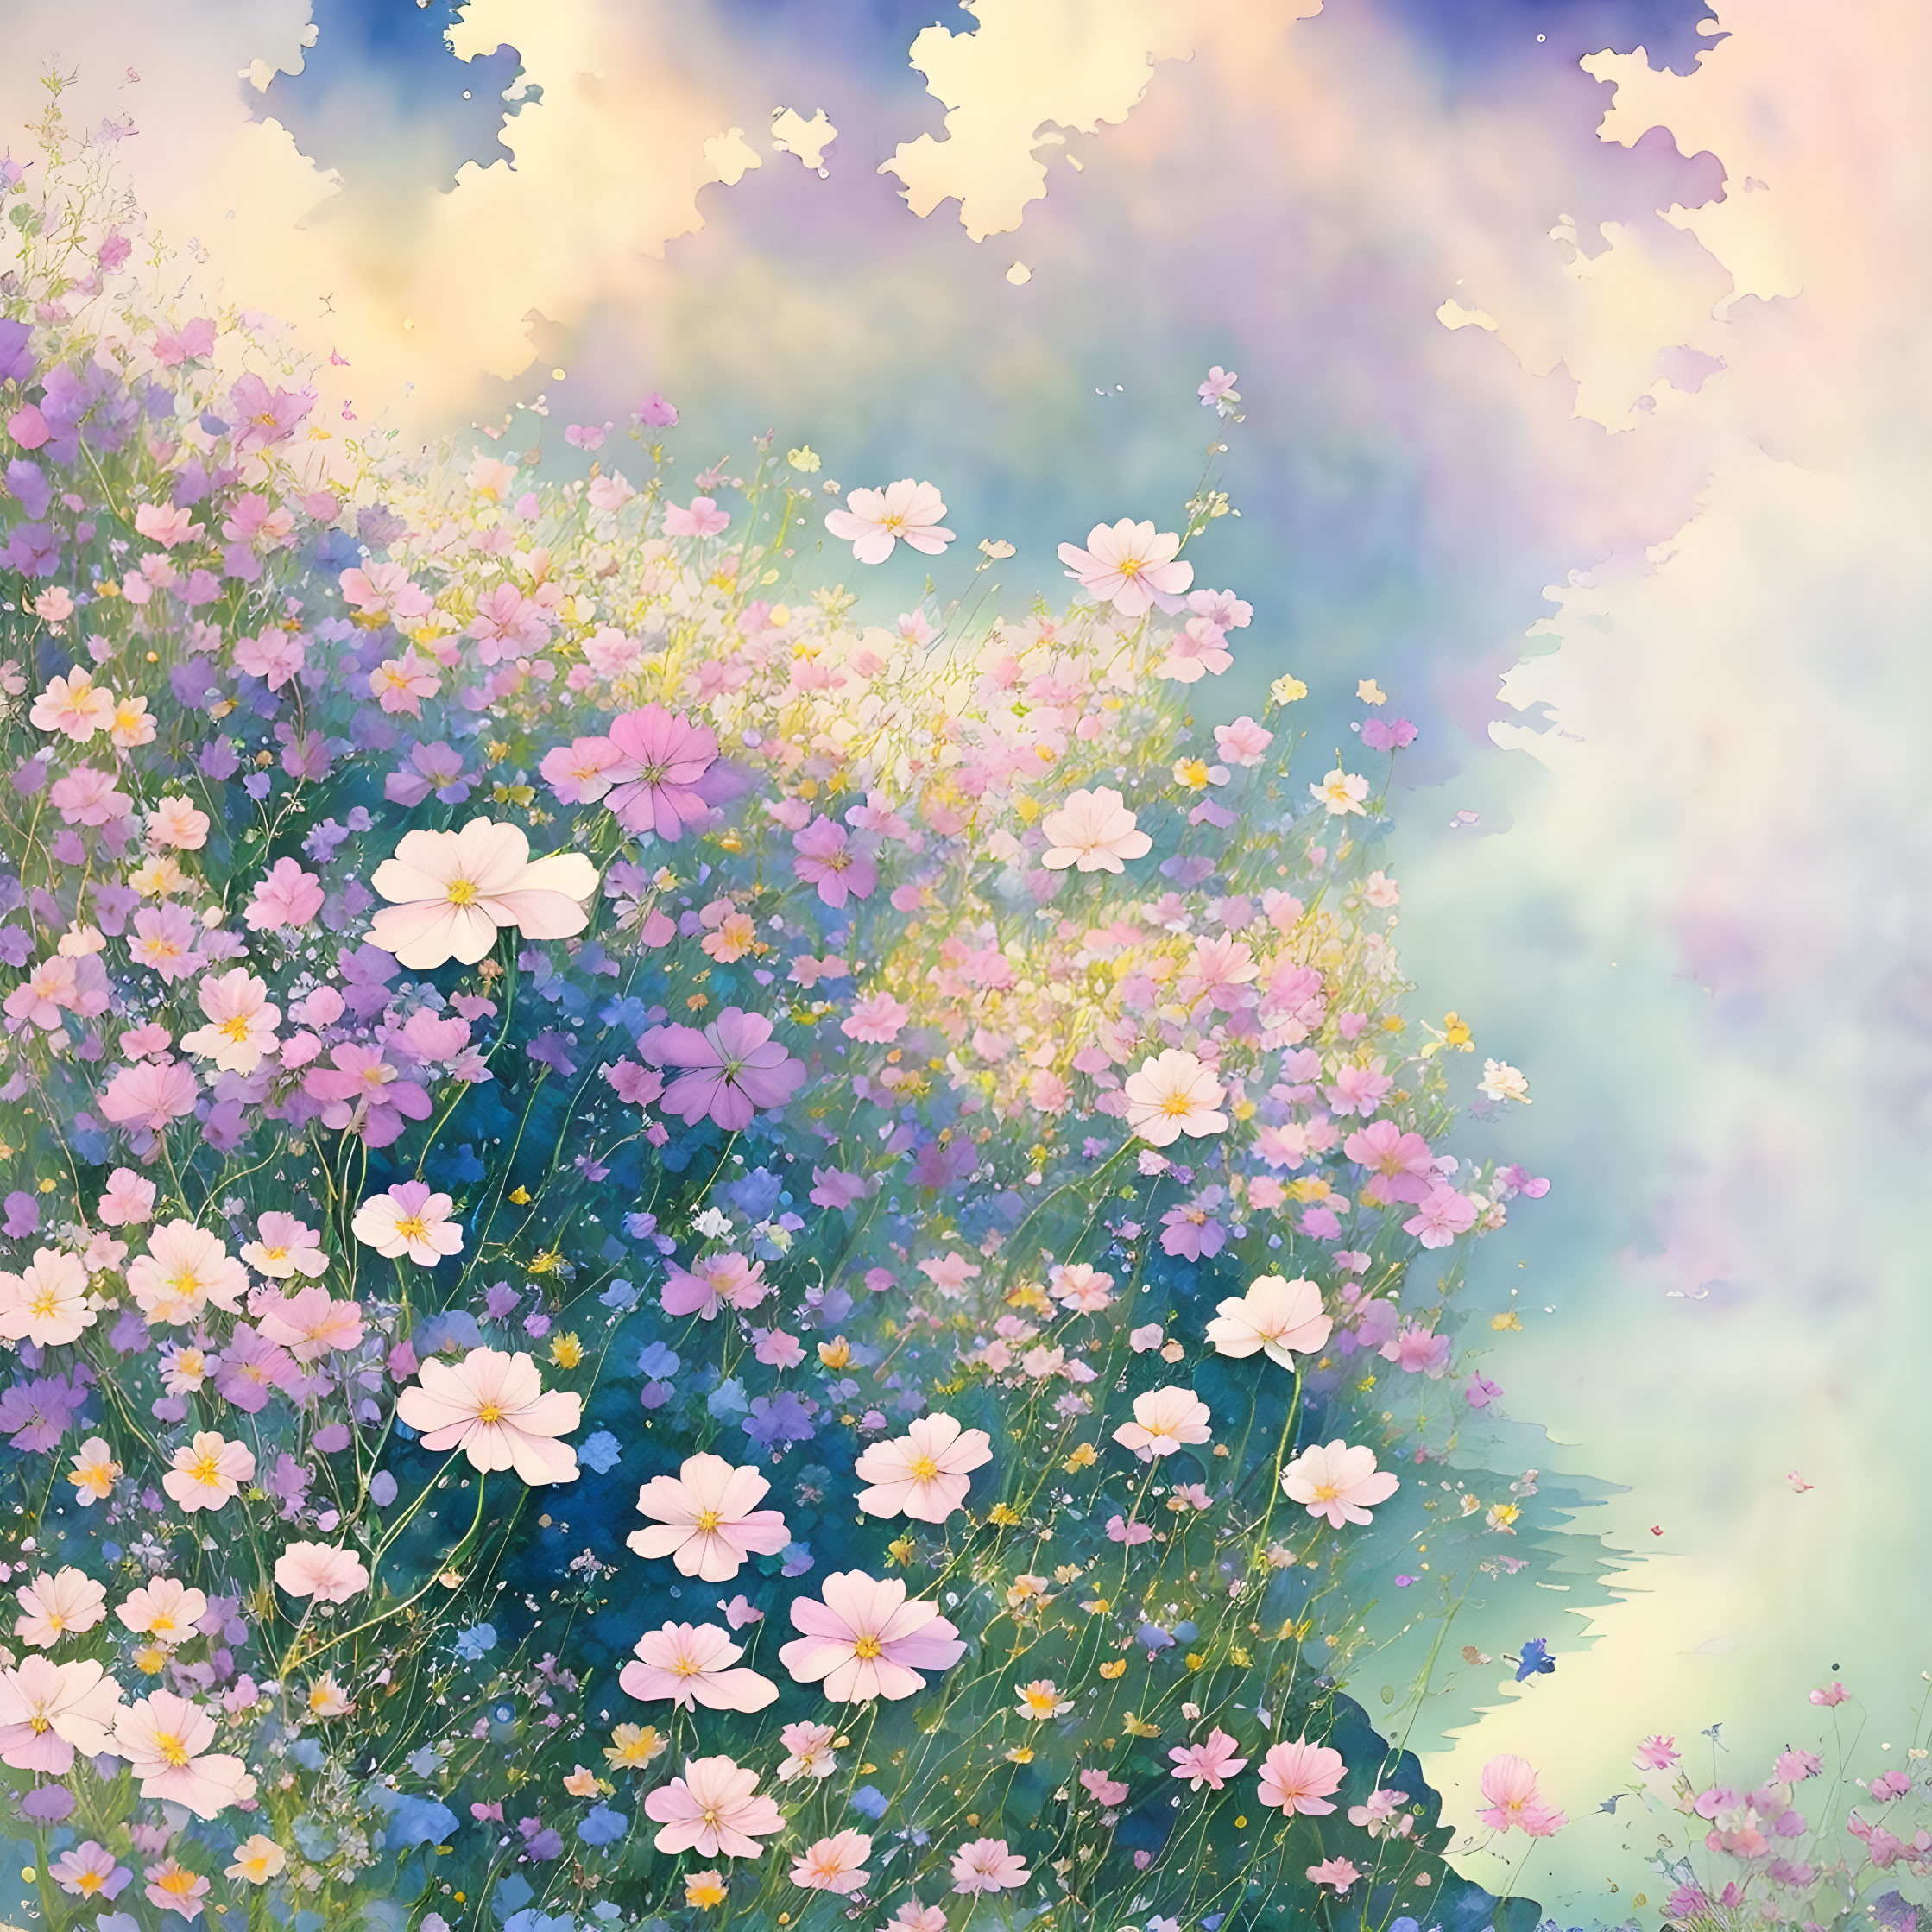 Enchanted Cosmos: Pastel Flower Field